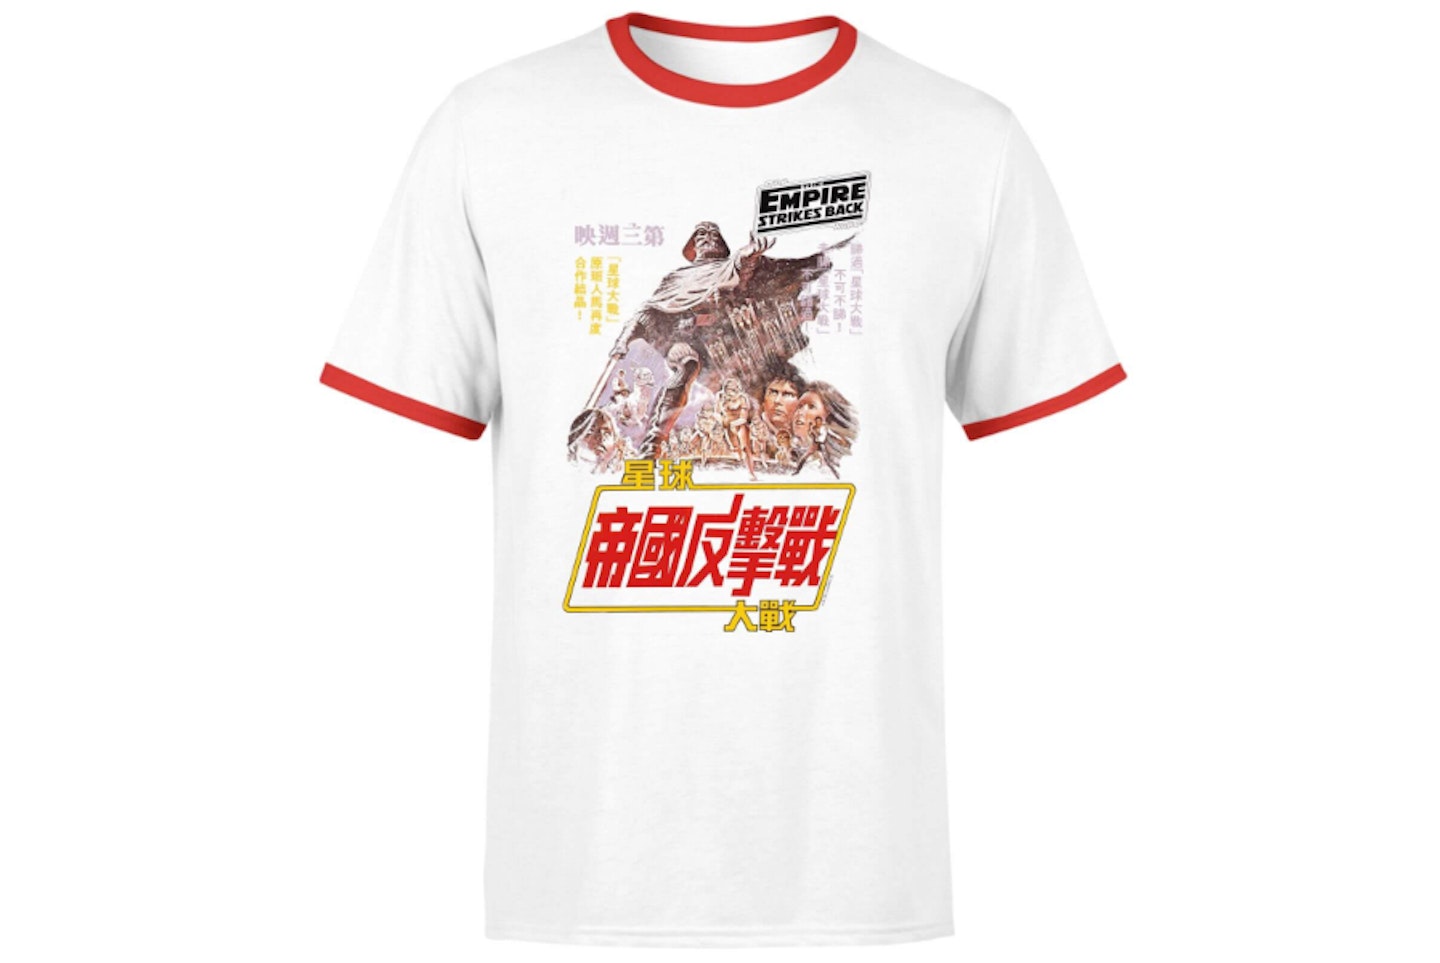 Empire Strikes Back Kanji Poster T-Shirt, £14.99